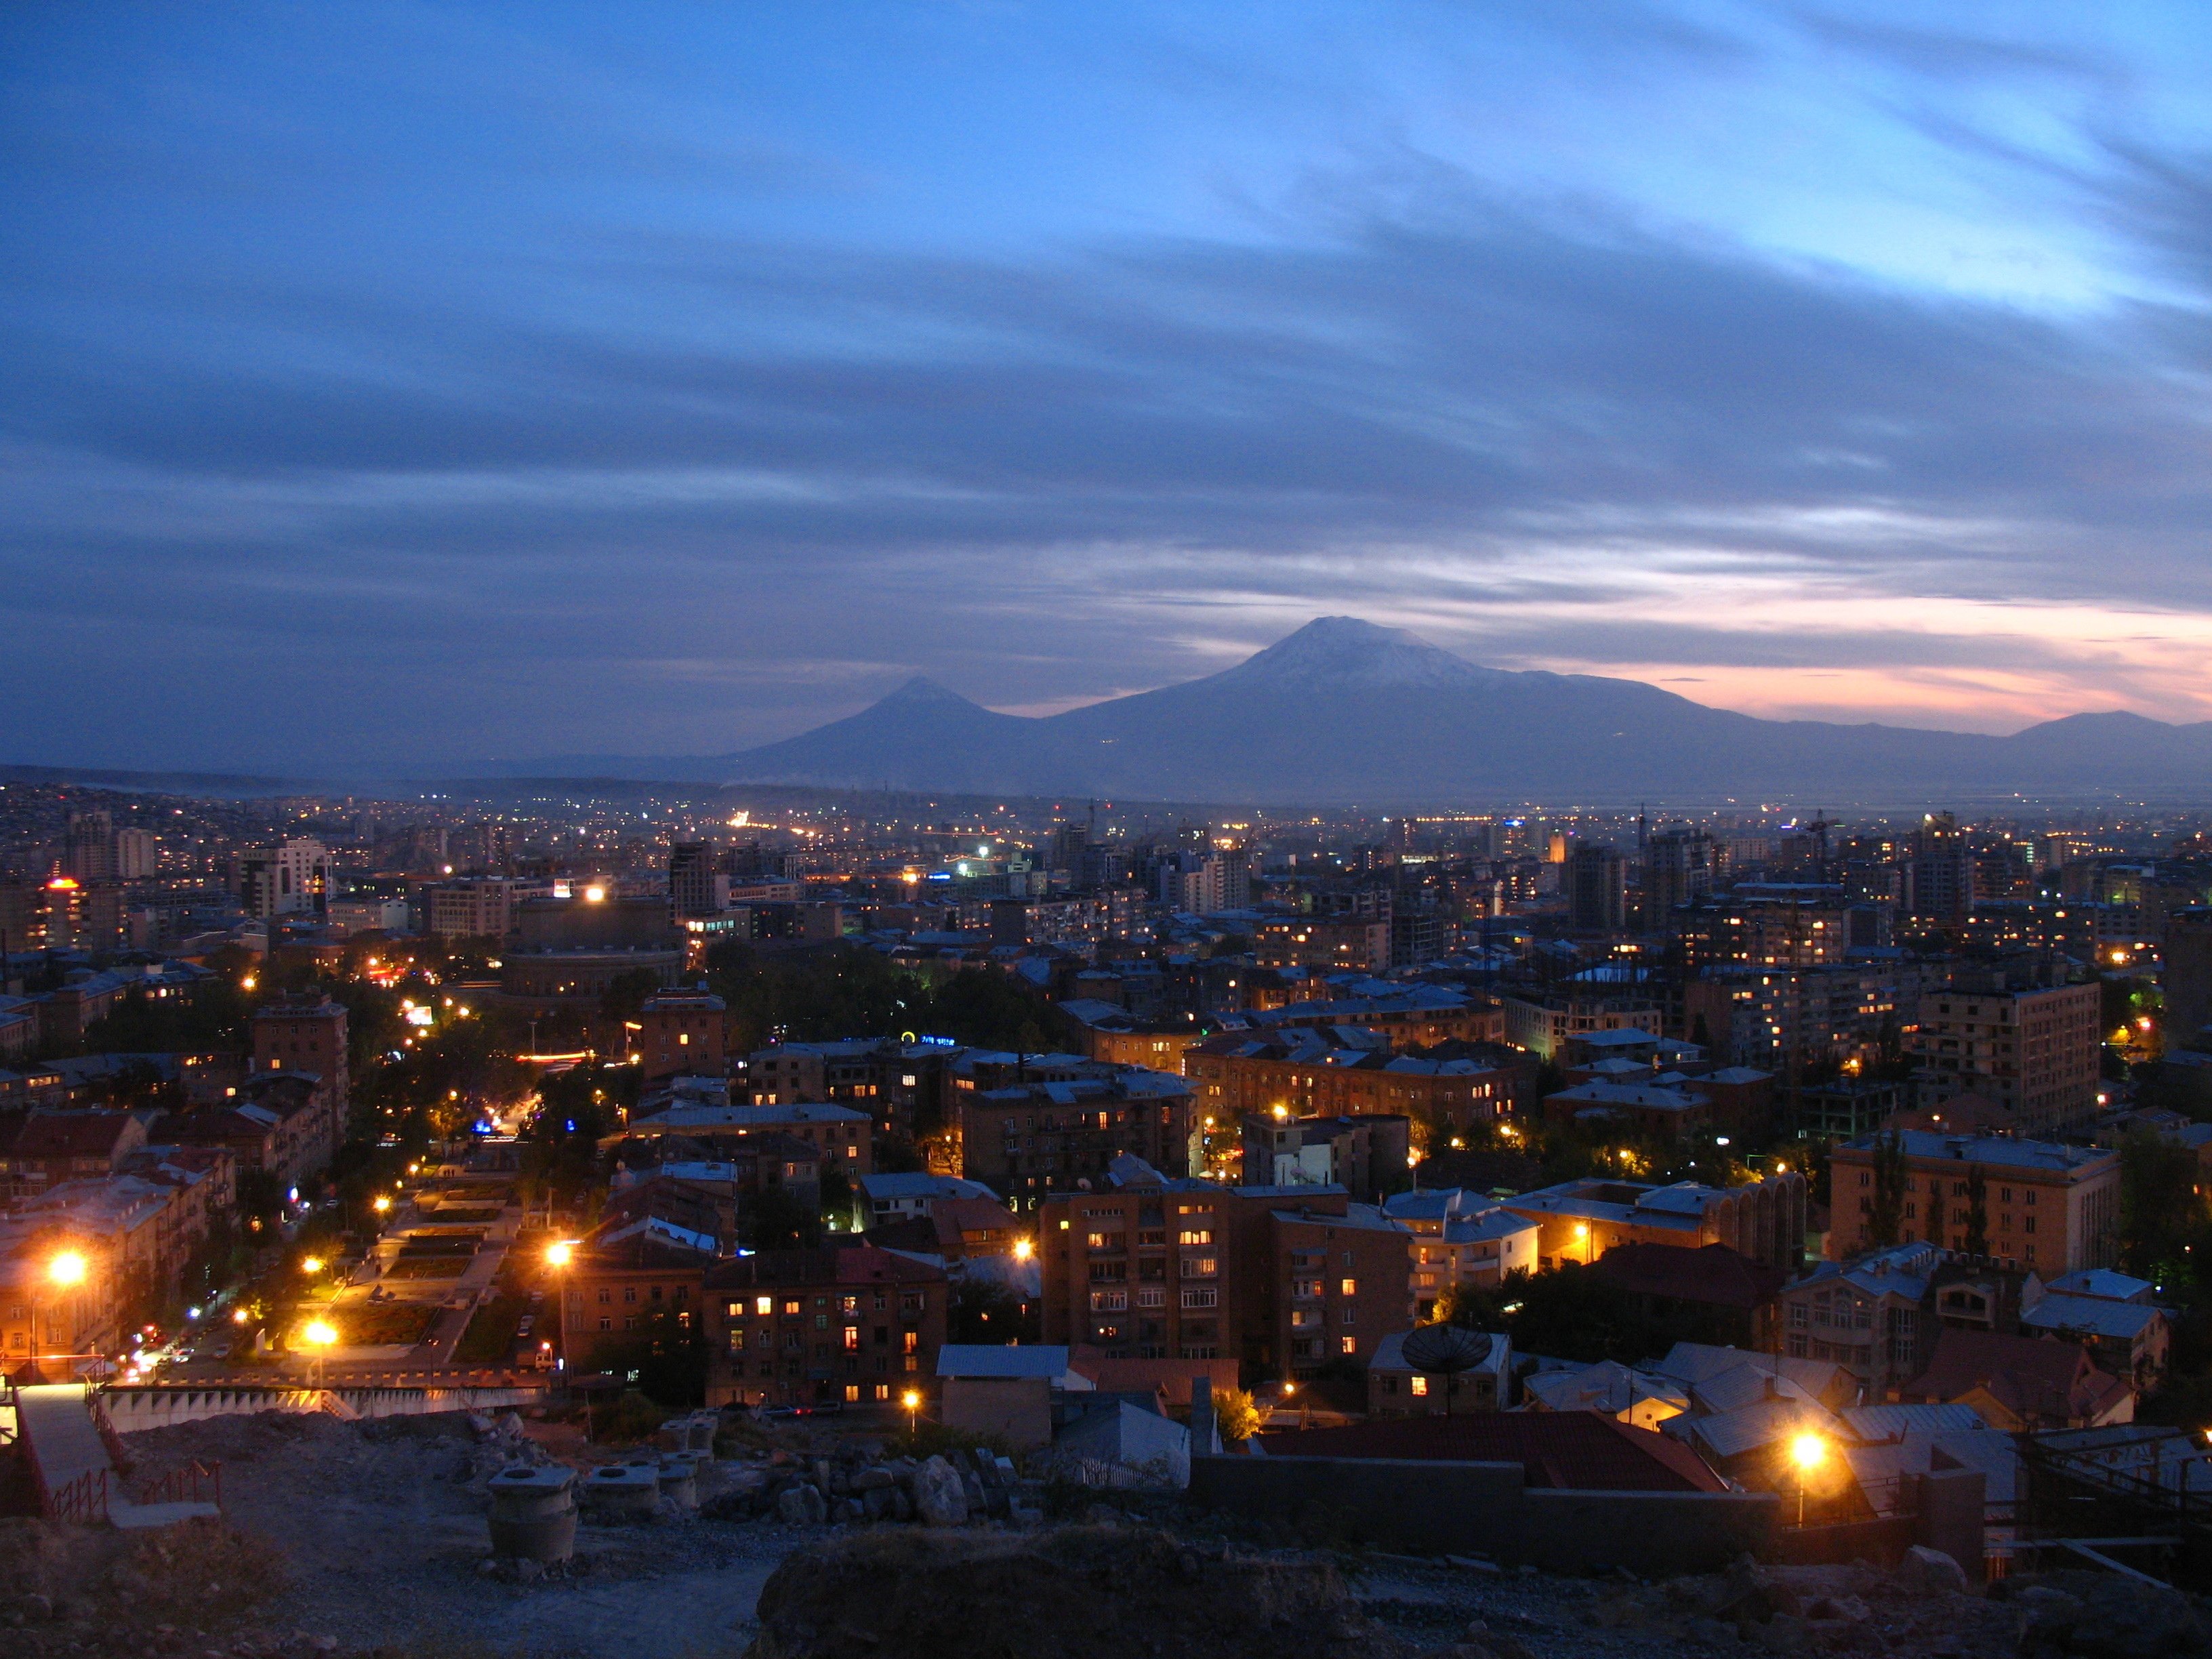 Ереван ночью. Каскад Вечерний Ереван. Ночной Каскад в Ереване. Каскад Ереван ночью. Ночной Ереван панорама.